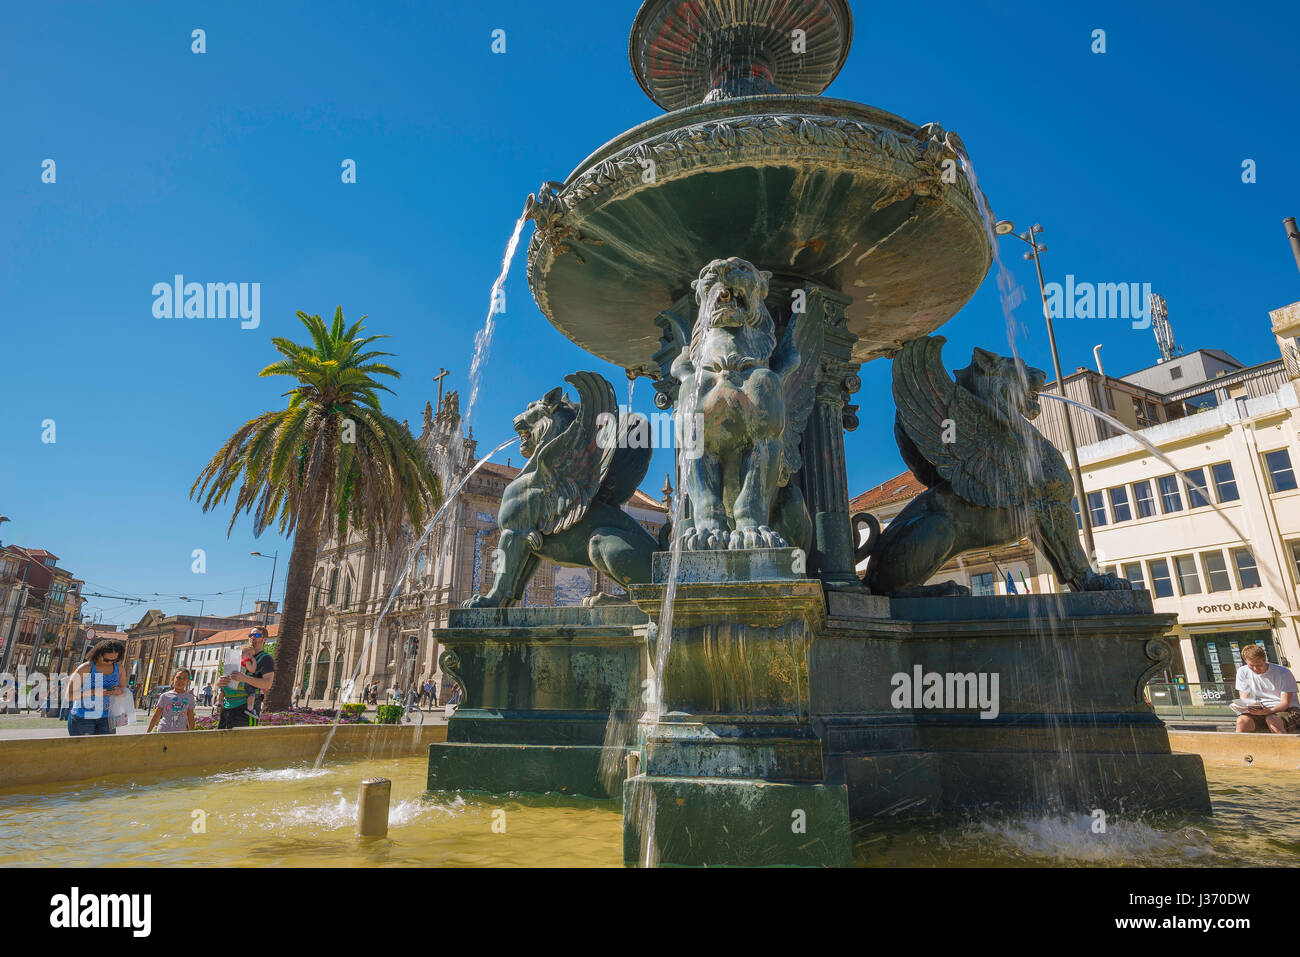 Porto Portugal fountain, the Lions' Fountain (Fonte dos Leoes) sited in the Praca de Gomez Teixeira near the Igreja do Carmo church, Portugal,Europe Stock Photo